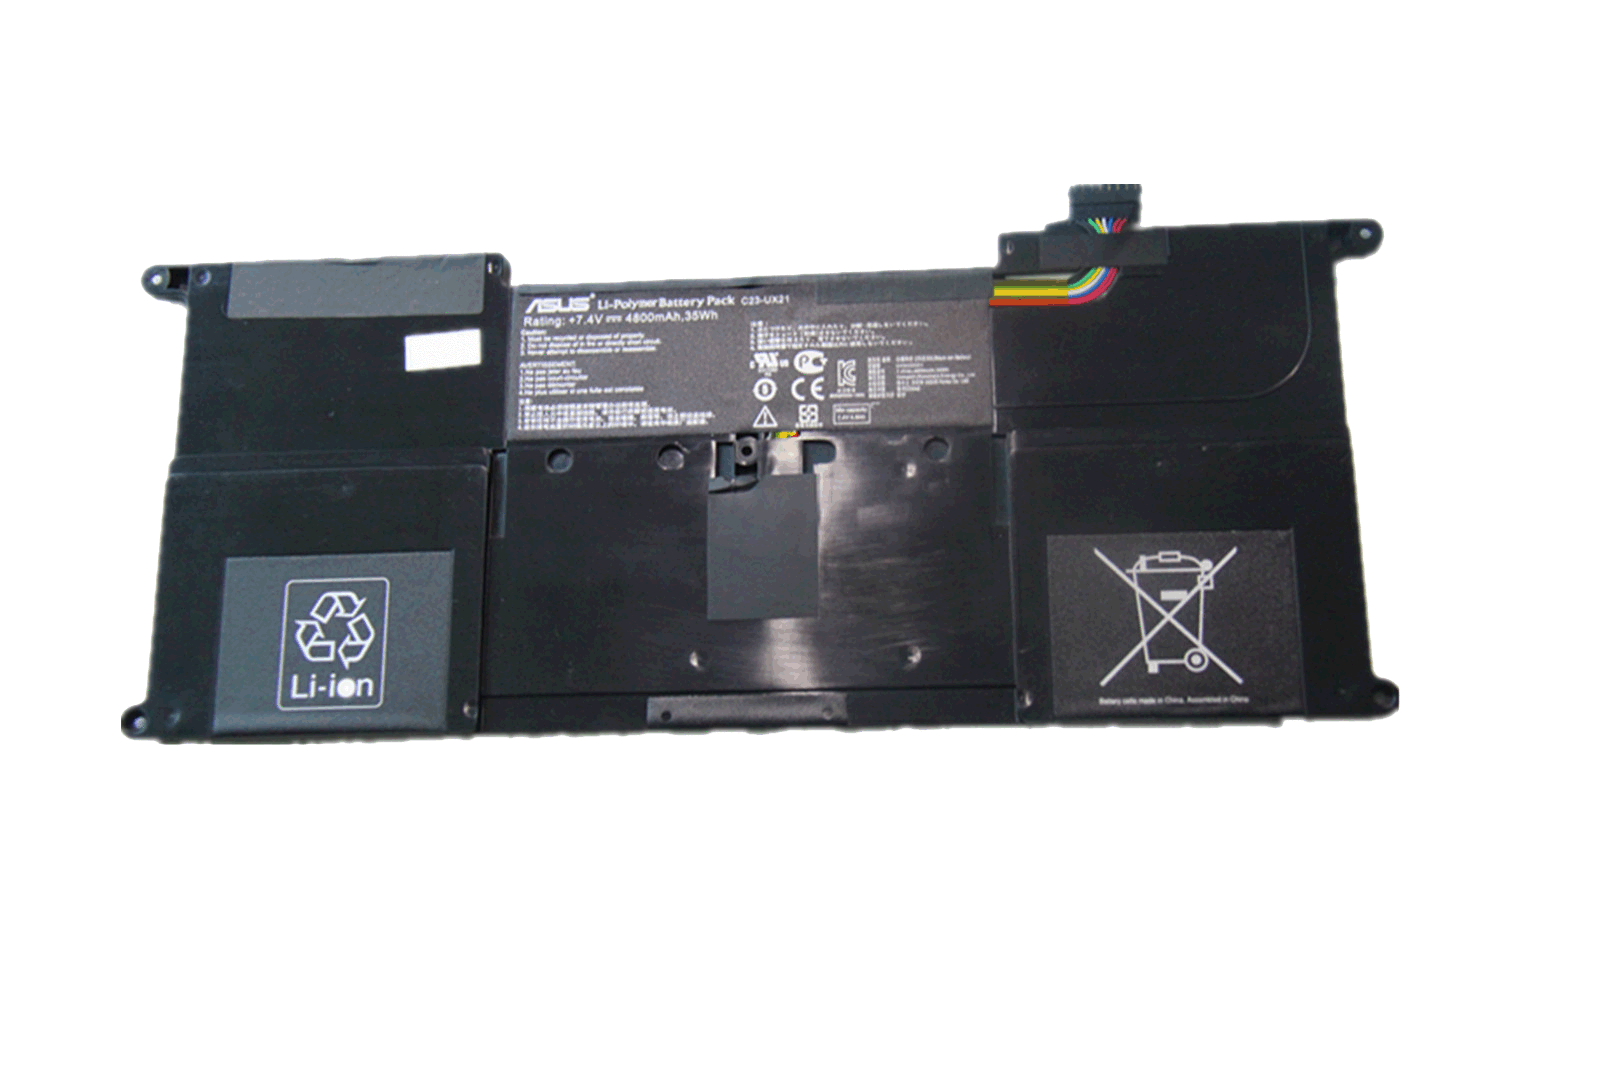 Replacement Asus ZenBook UX21A UX21E C23-UX21 Ultrabook Battery